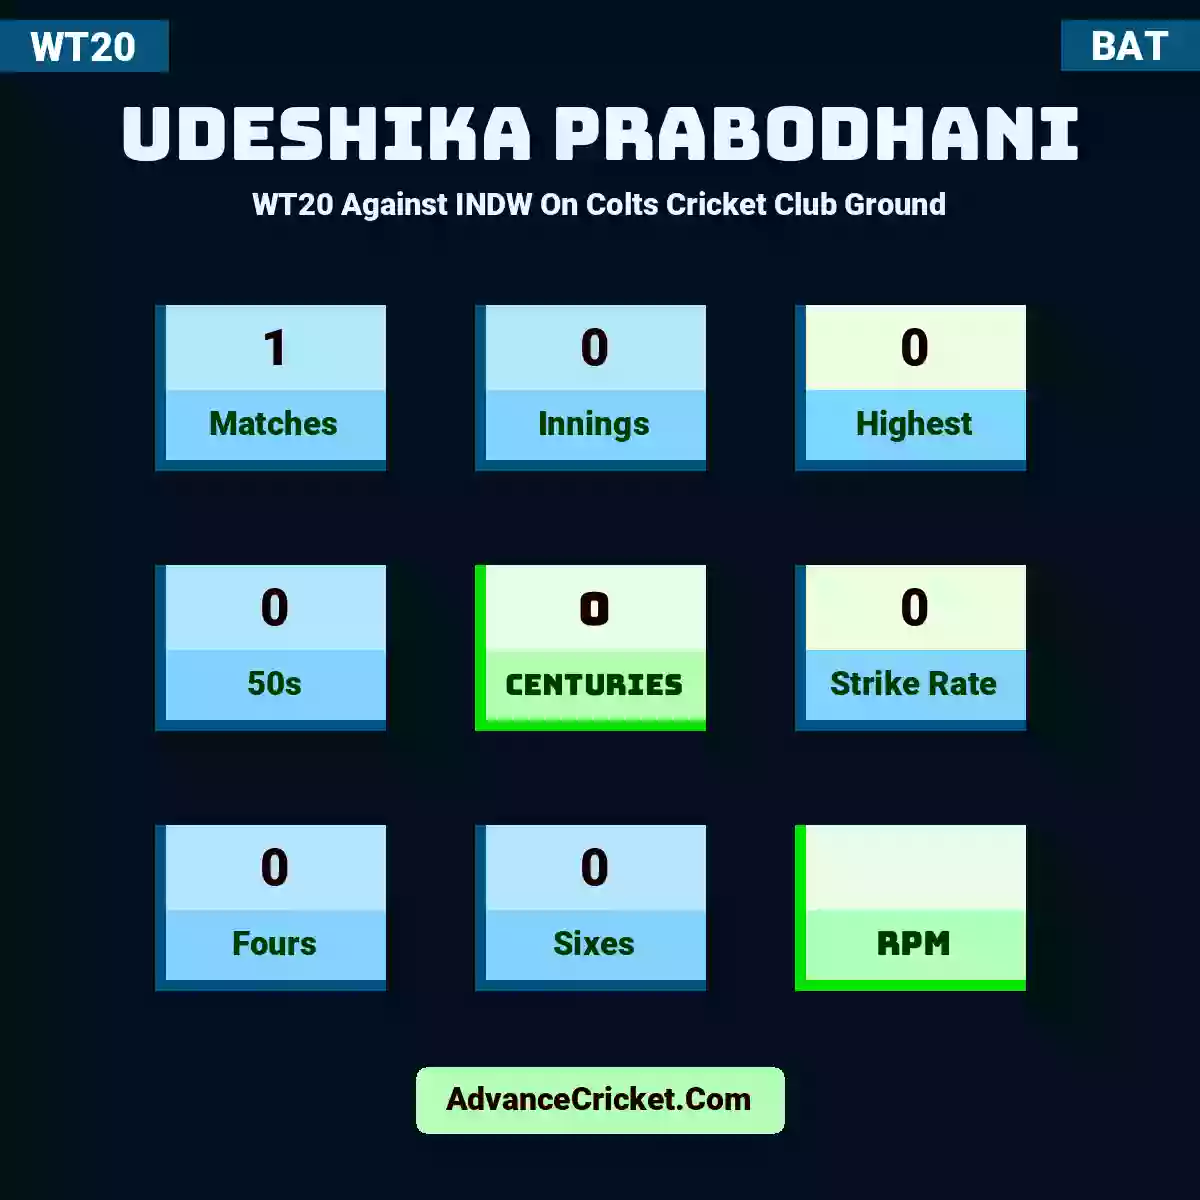 Udeshika Prabodhani WT20  Against INDW On Colts Cricket Club Ground, Udeshika Prabodhani played 1 matches, scored 0 runs as highest, 0 half-centuries, and 0 centuries, with a strike rate of 0. U.Prabodhani hit 0 fours and 0 sixes.